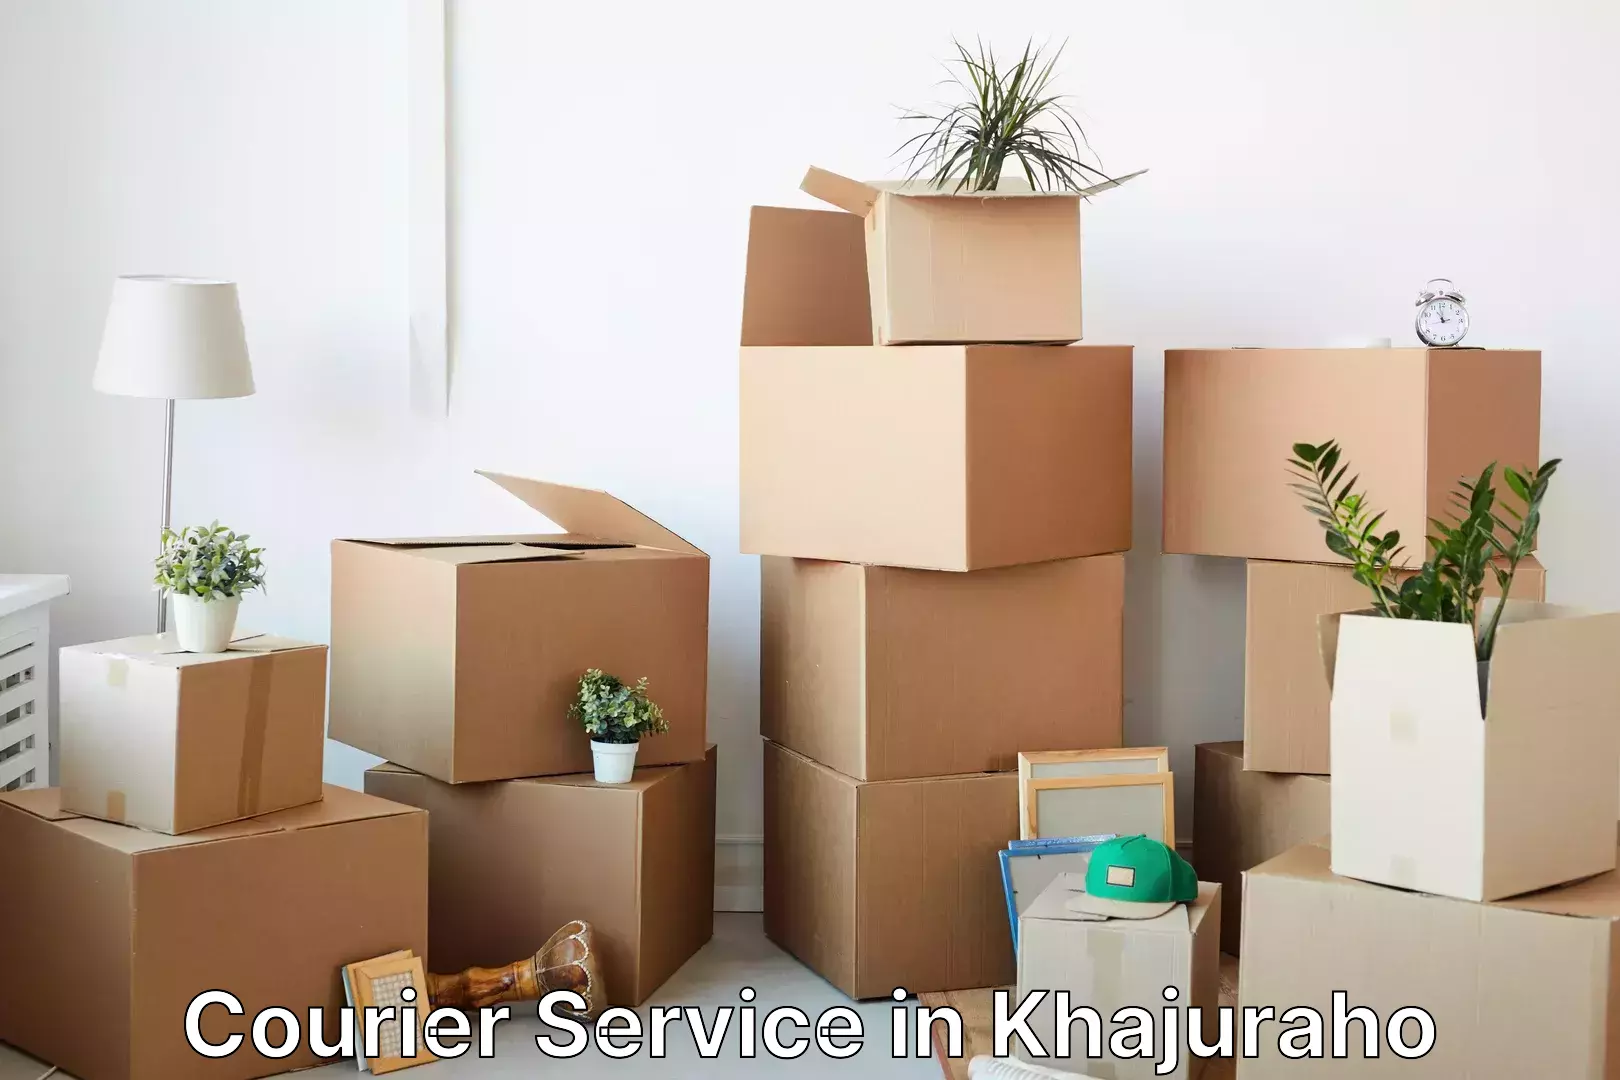 Fast delivery service in Khajuraho